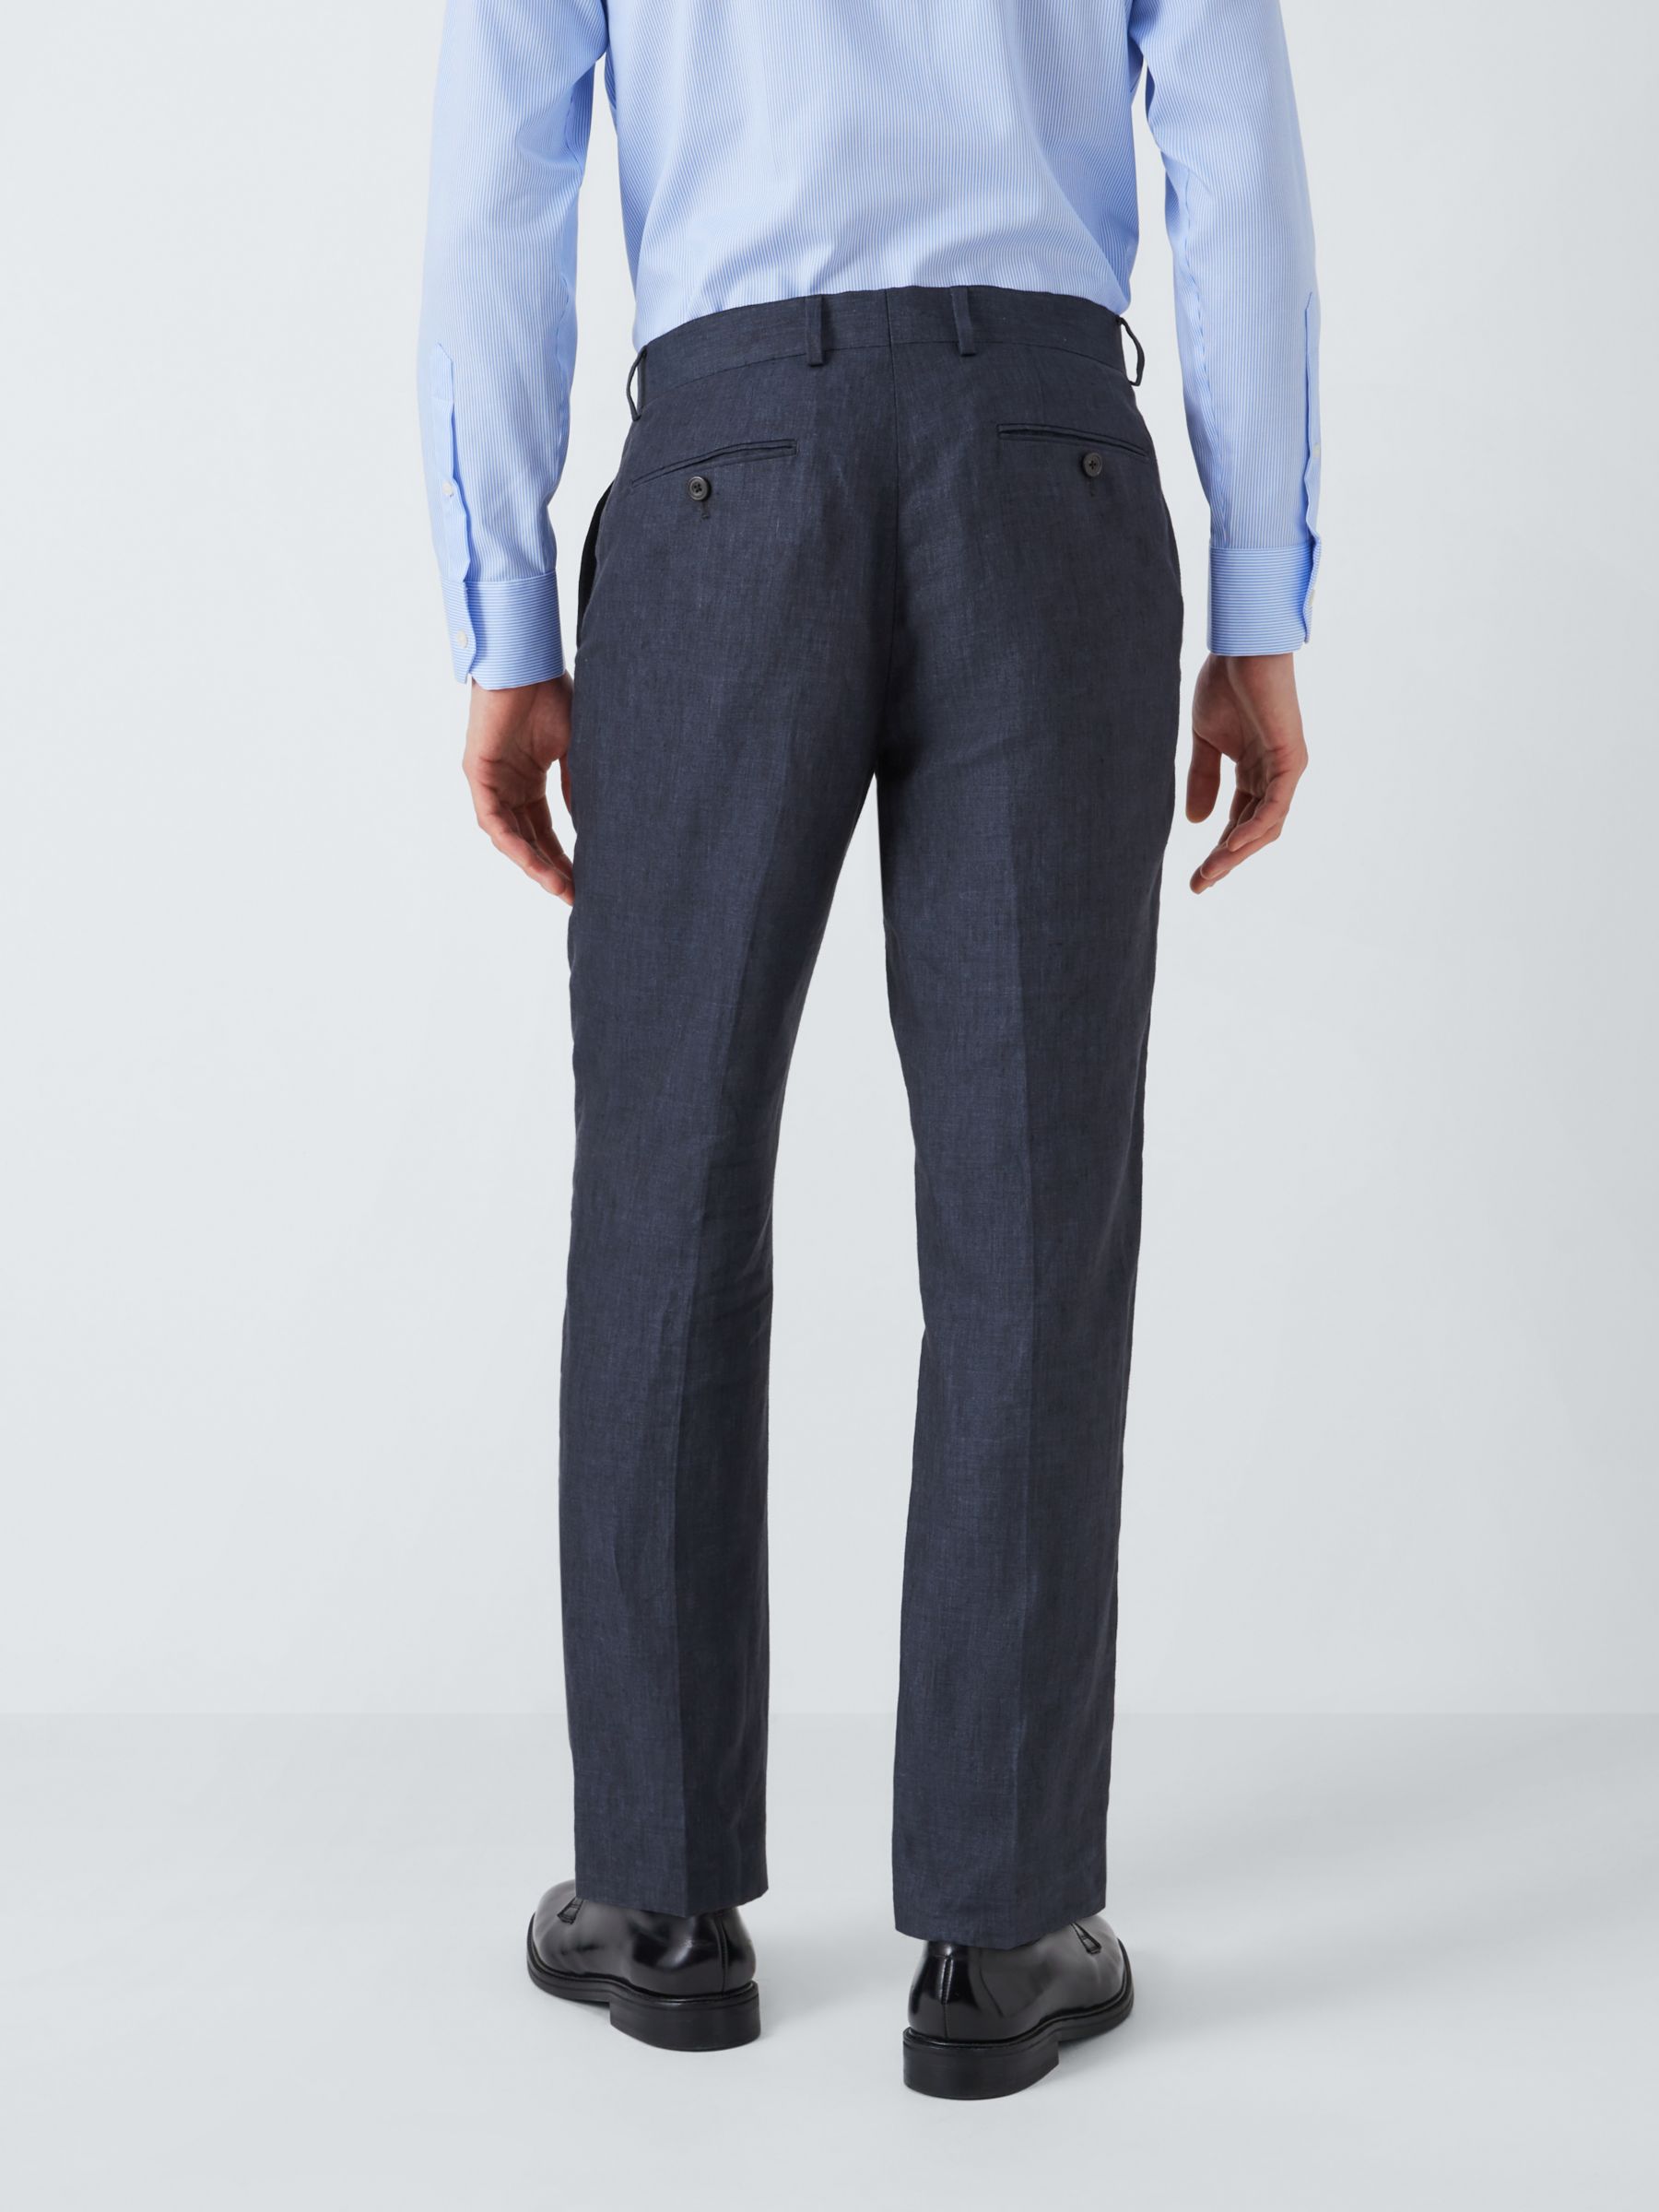 John Lewis Cambridge Linen Regular Fit Trousers, Navy, 30R